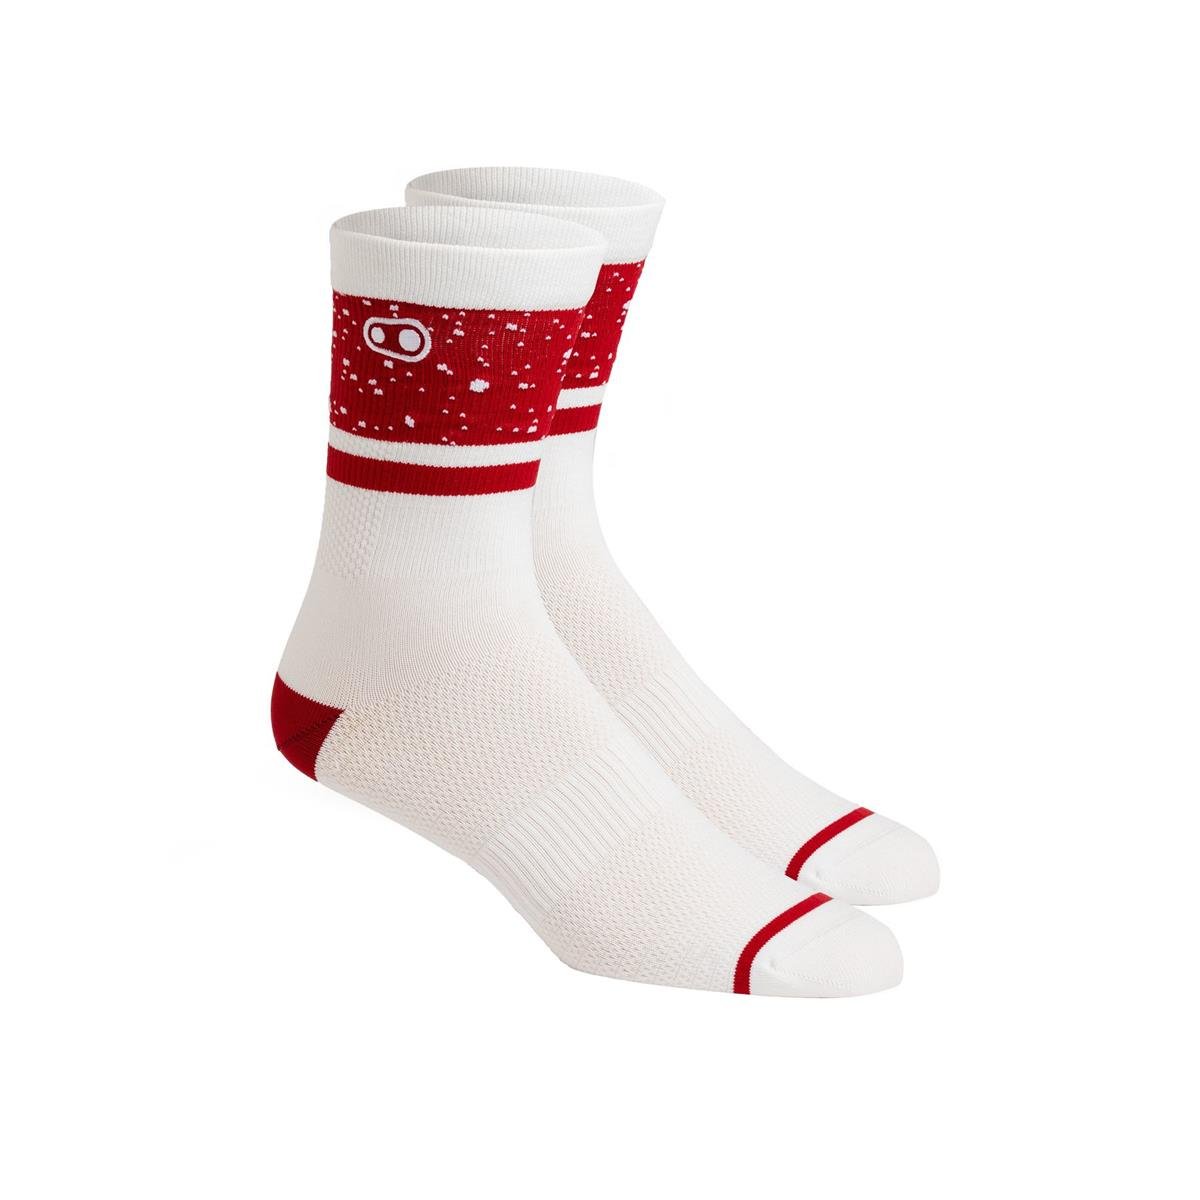 Crankbrothers Socken Icon - Splatter Limited Edition Weiß/Rot